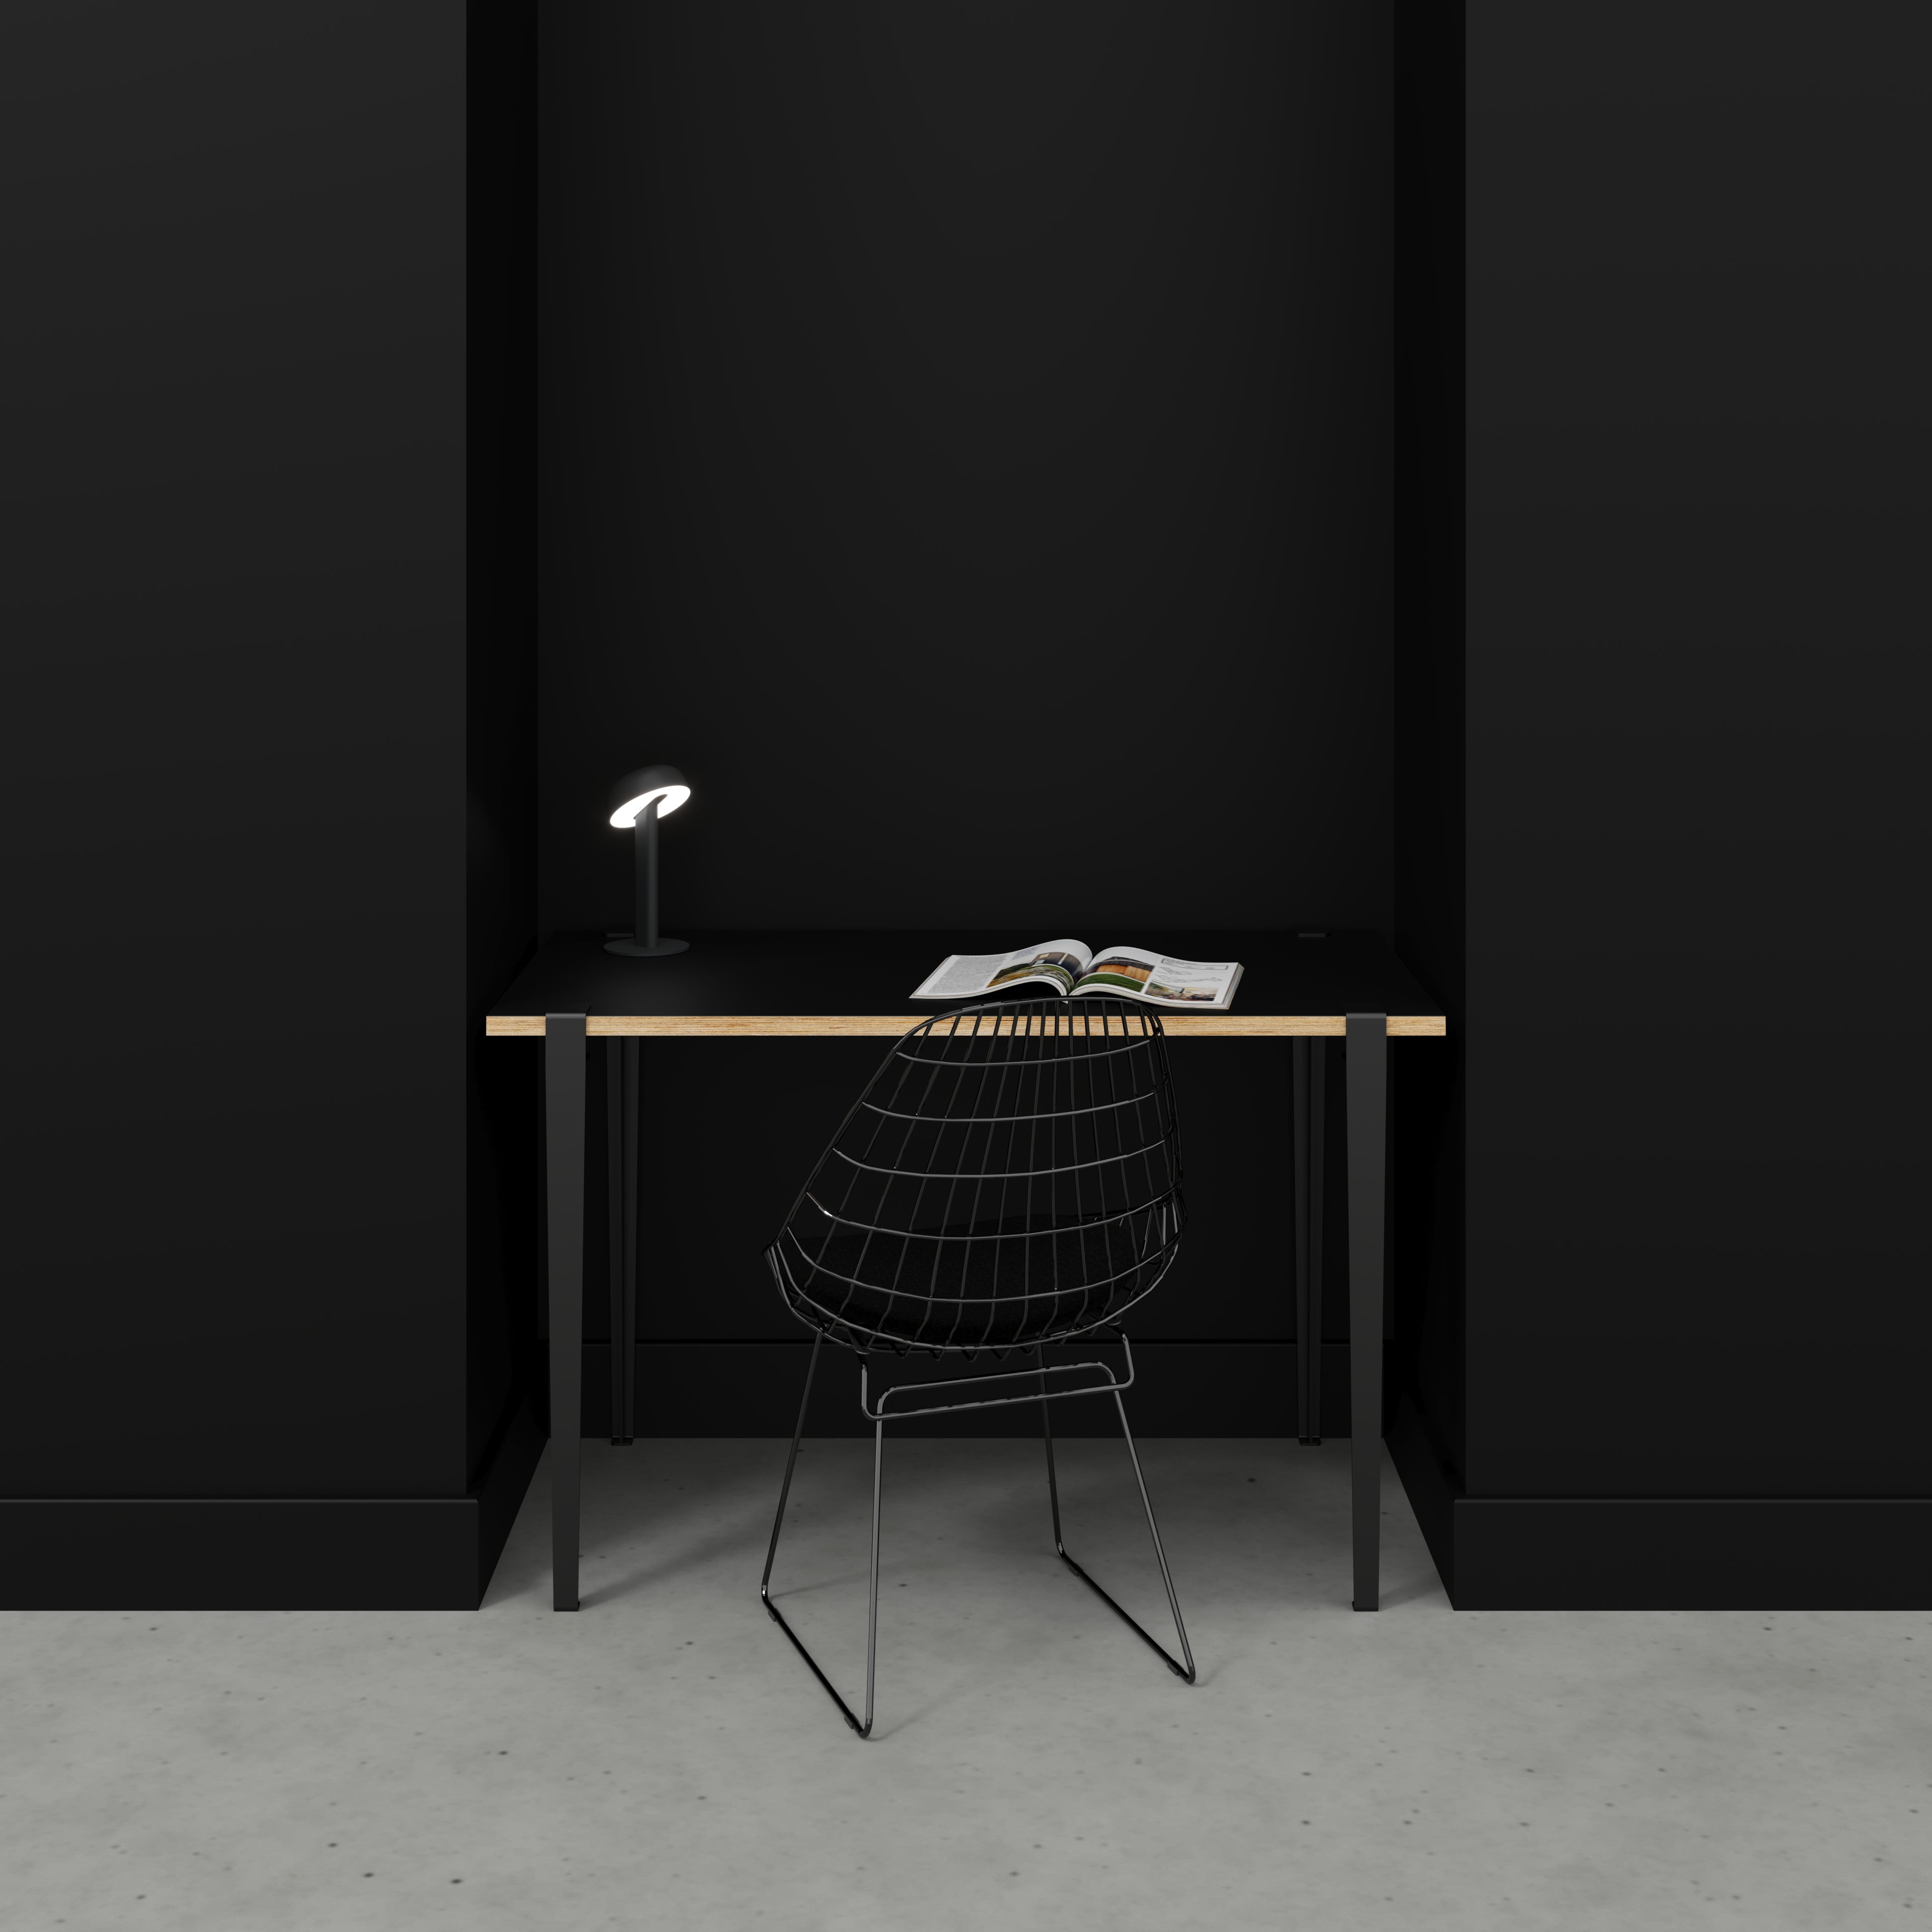 Desk with Black Tiptoe Legs - Formica Diamond Black - 1200(w) x 600(d) x 750(h)